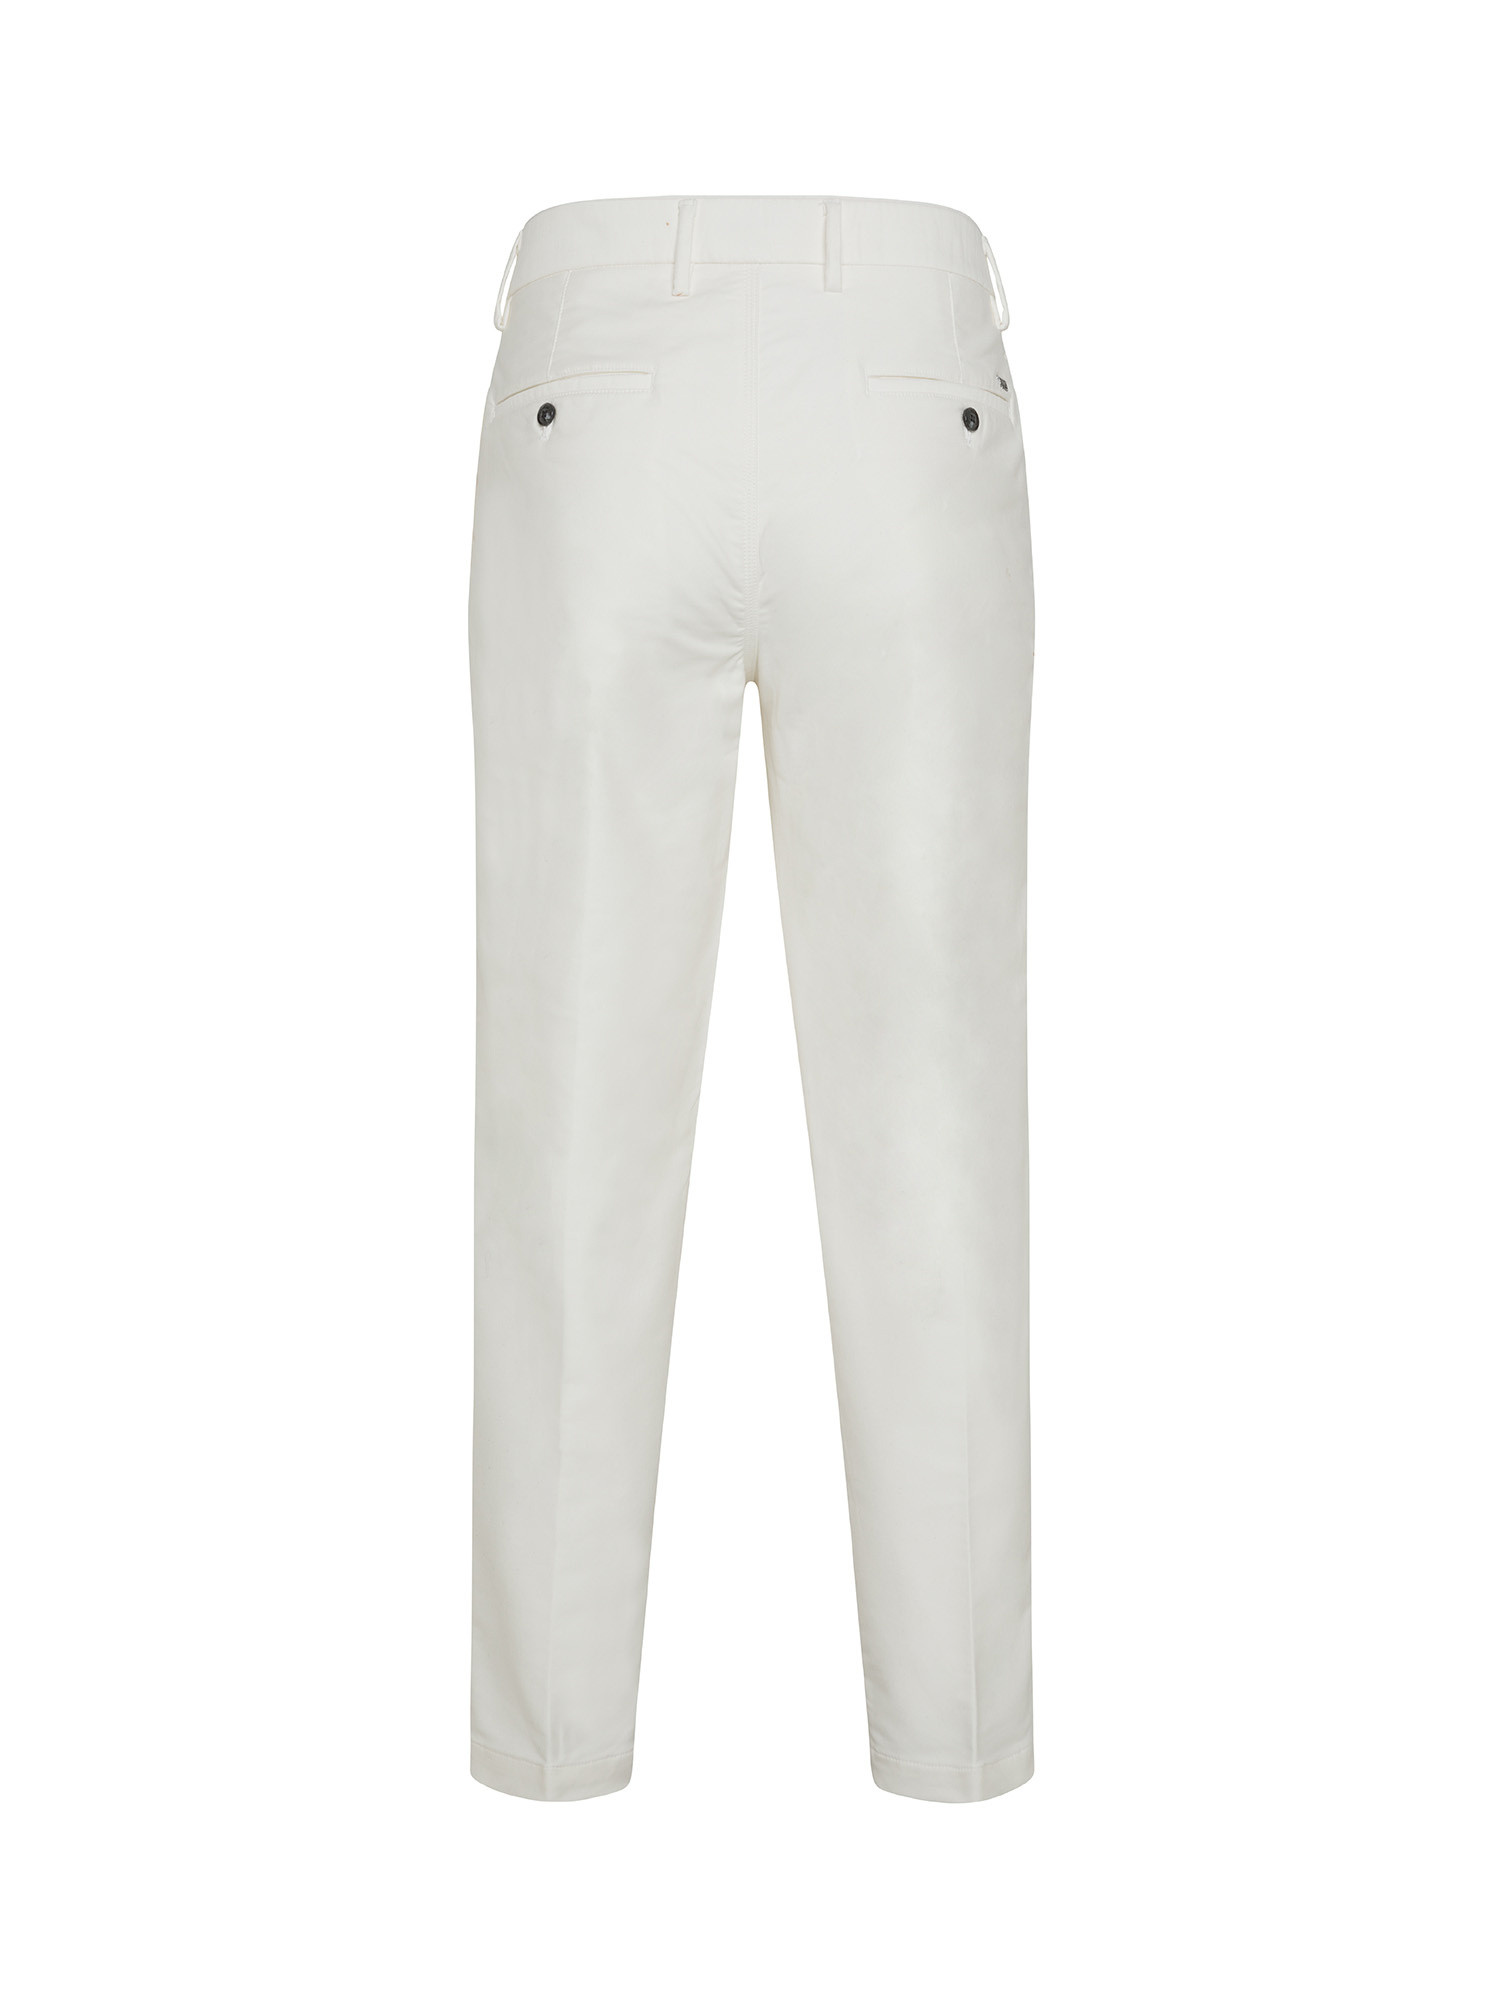 Emporio Armani - Pantaloni chino, Bianco, large image number 1